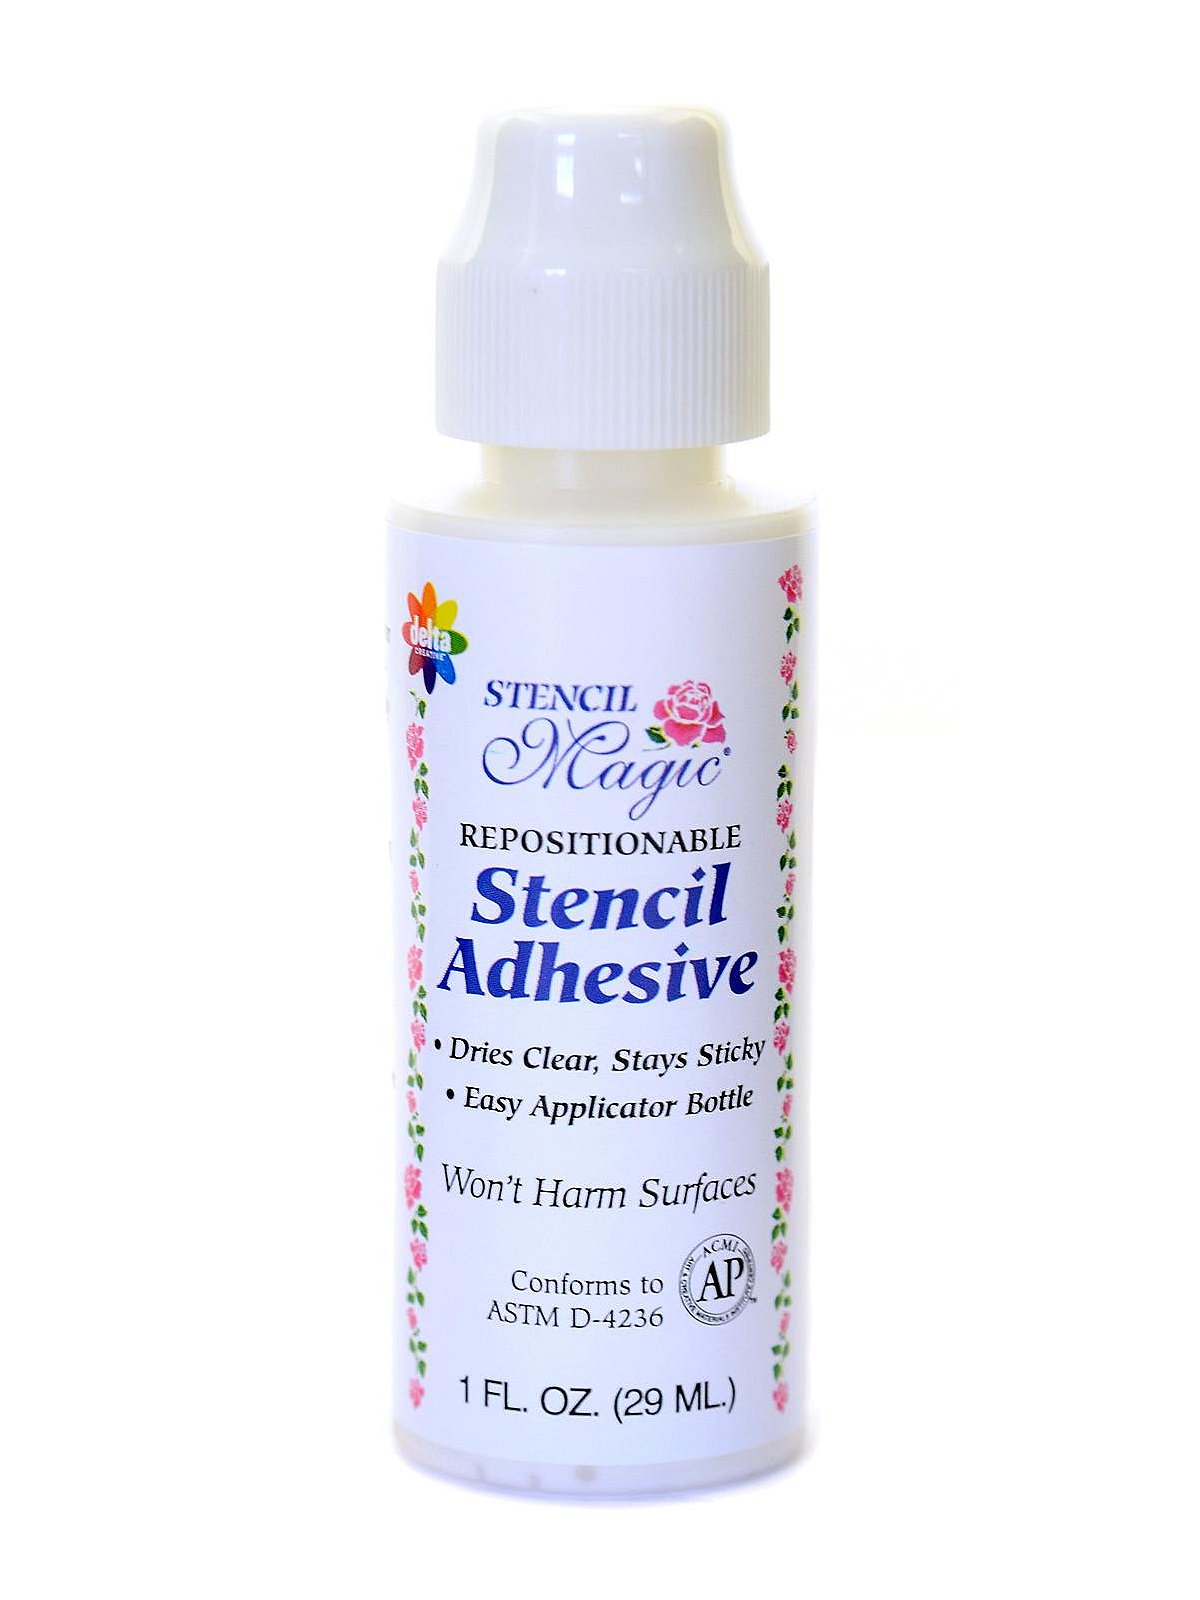 Stencil Ease Repositionable Spray Adhesive - 4.4 oz. can